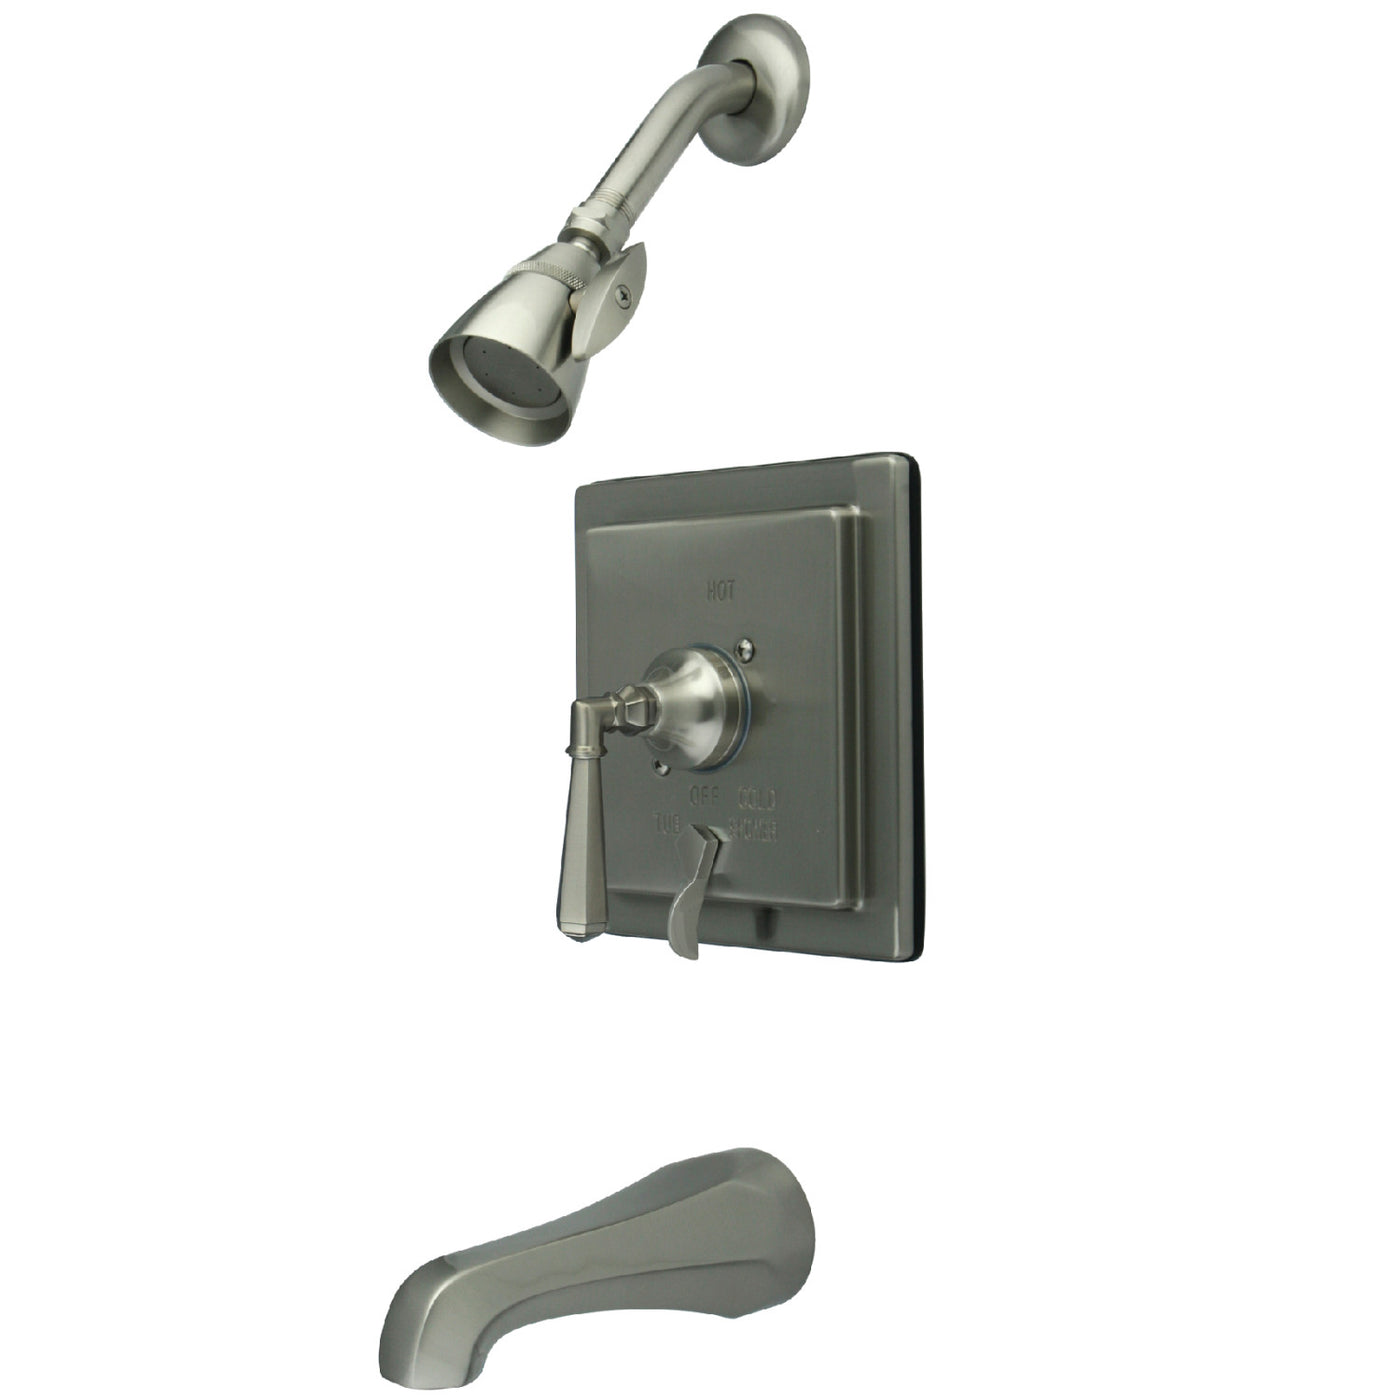 Elements of Design EB86584HL Tub and Shower Faucet with Diverter, Brushed Nickel